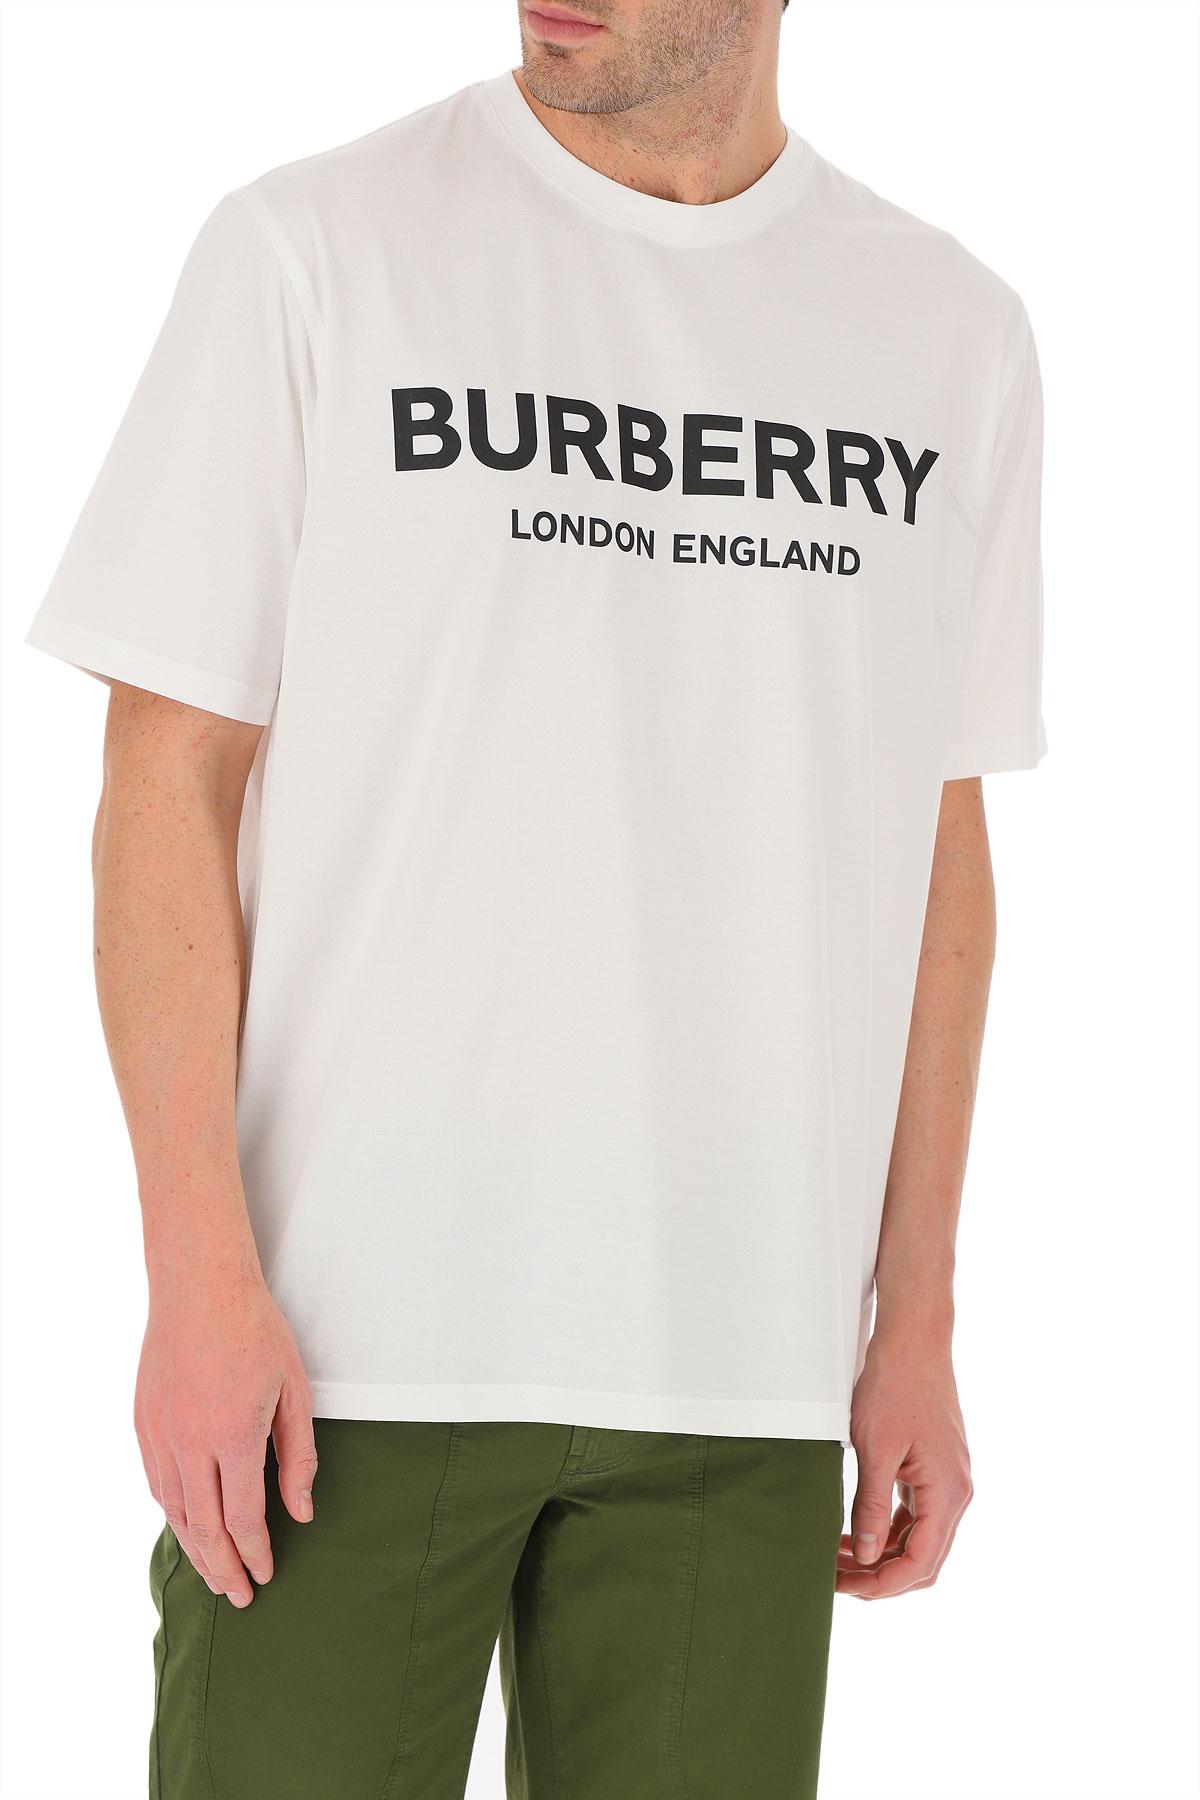 Burberry Cotton T-shirt For Men in White for Men - Lyst